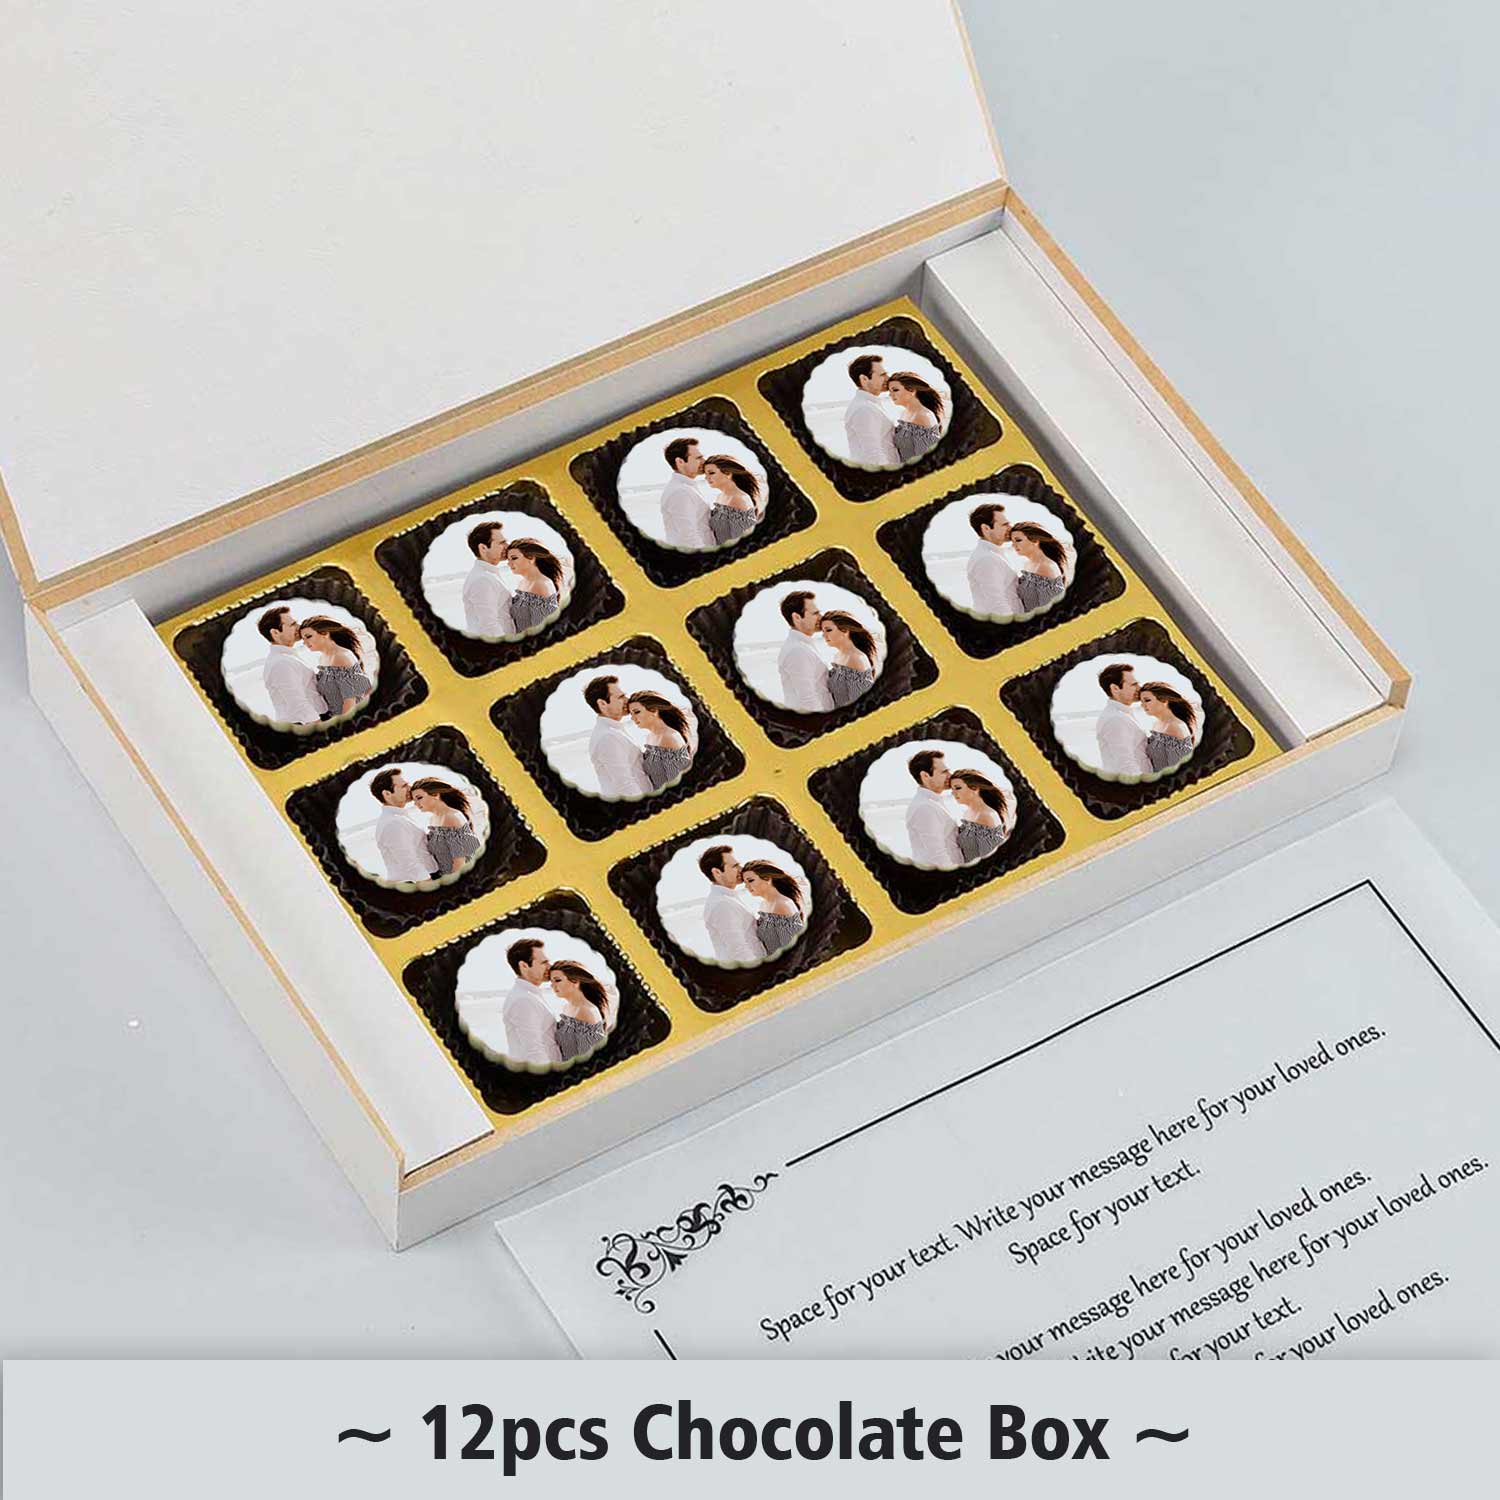 photo printed on chocolates graceful design and border